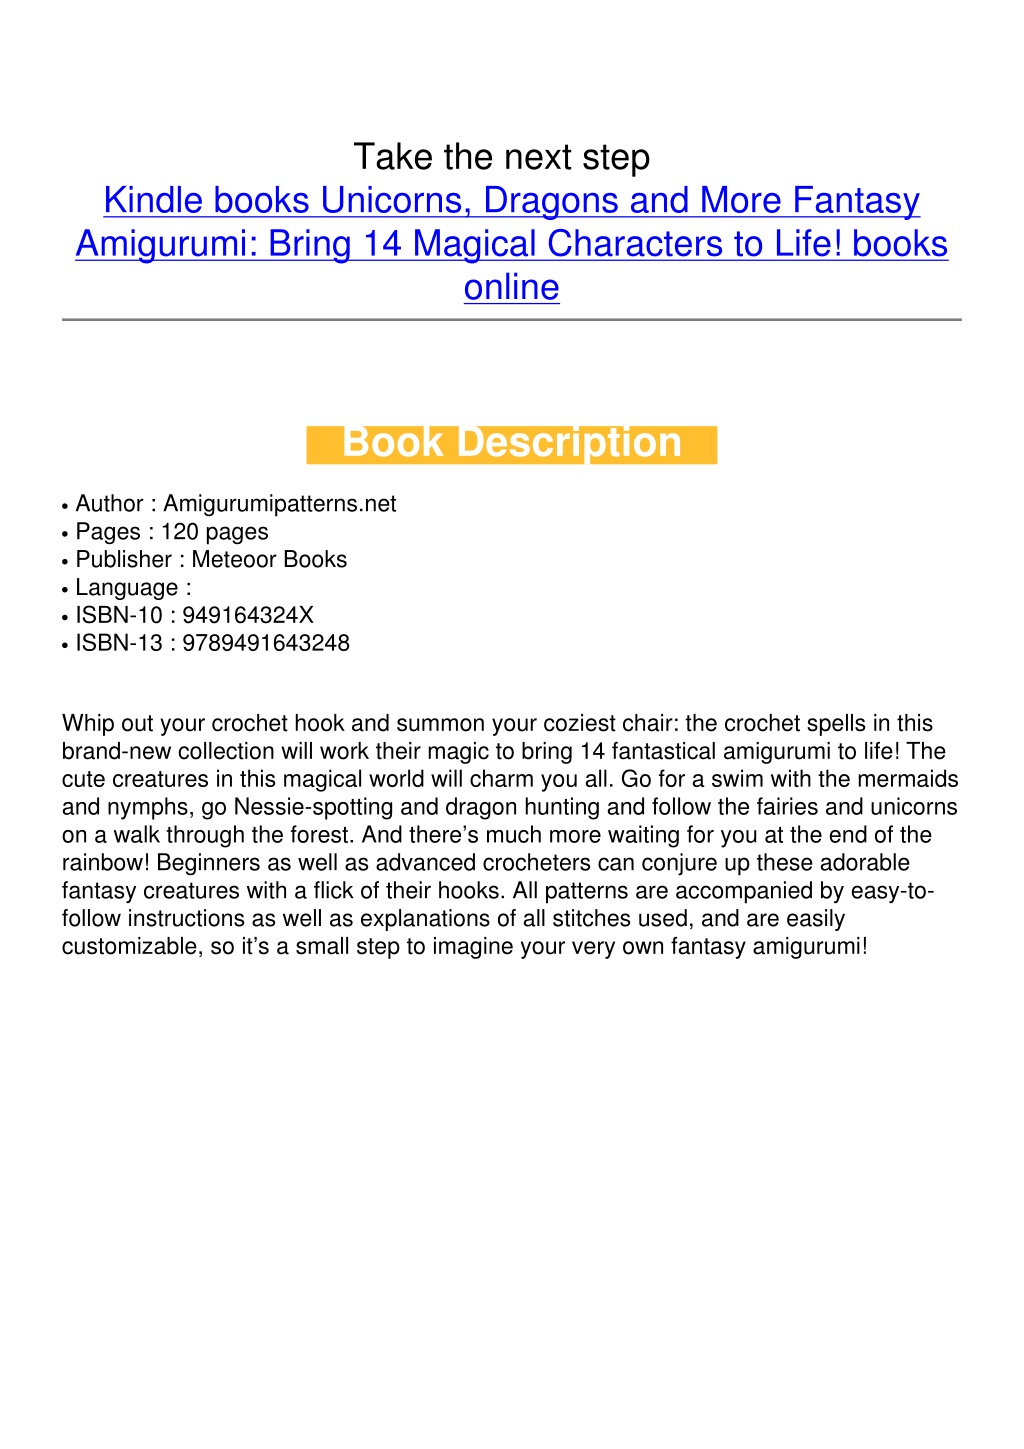 Unicorns, Dragons and More Fantasy Amigurumi: Bring 14 Magical Characters to Life! [Book]